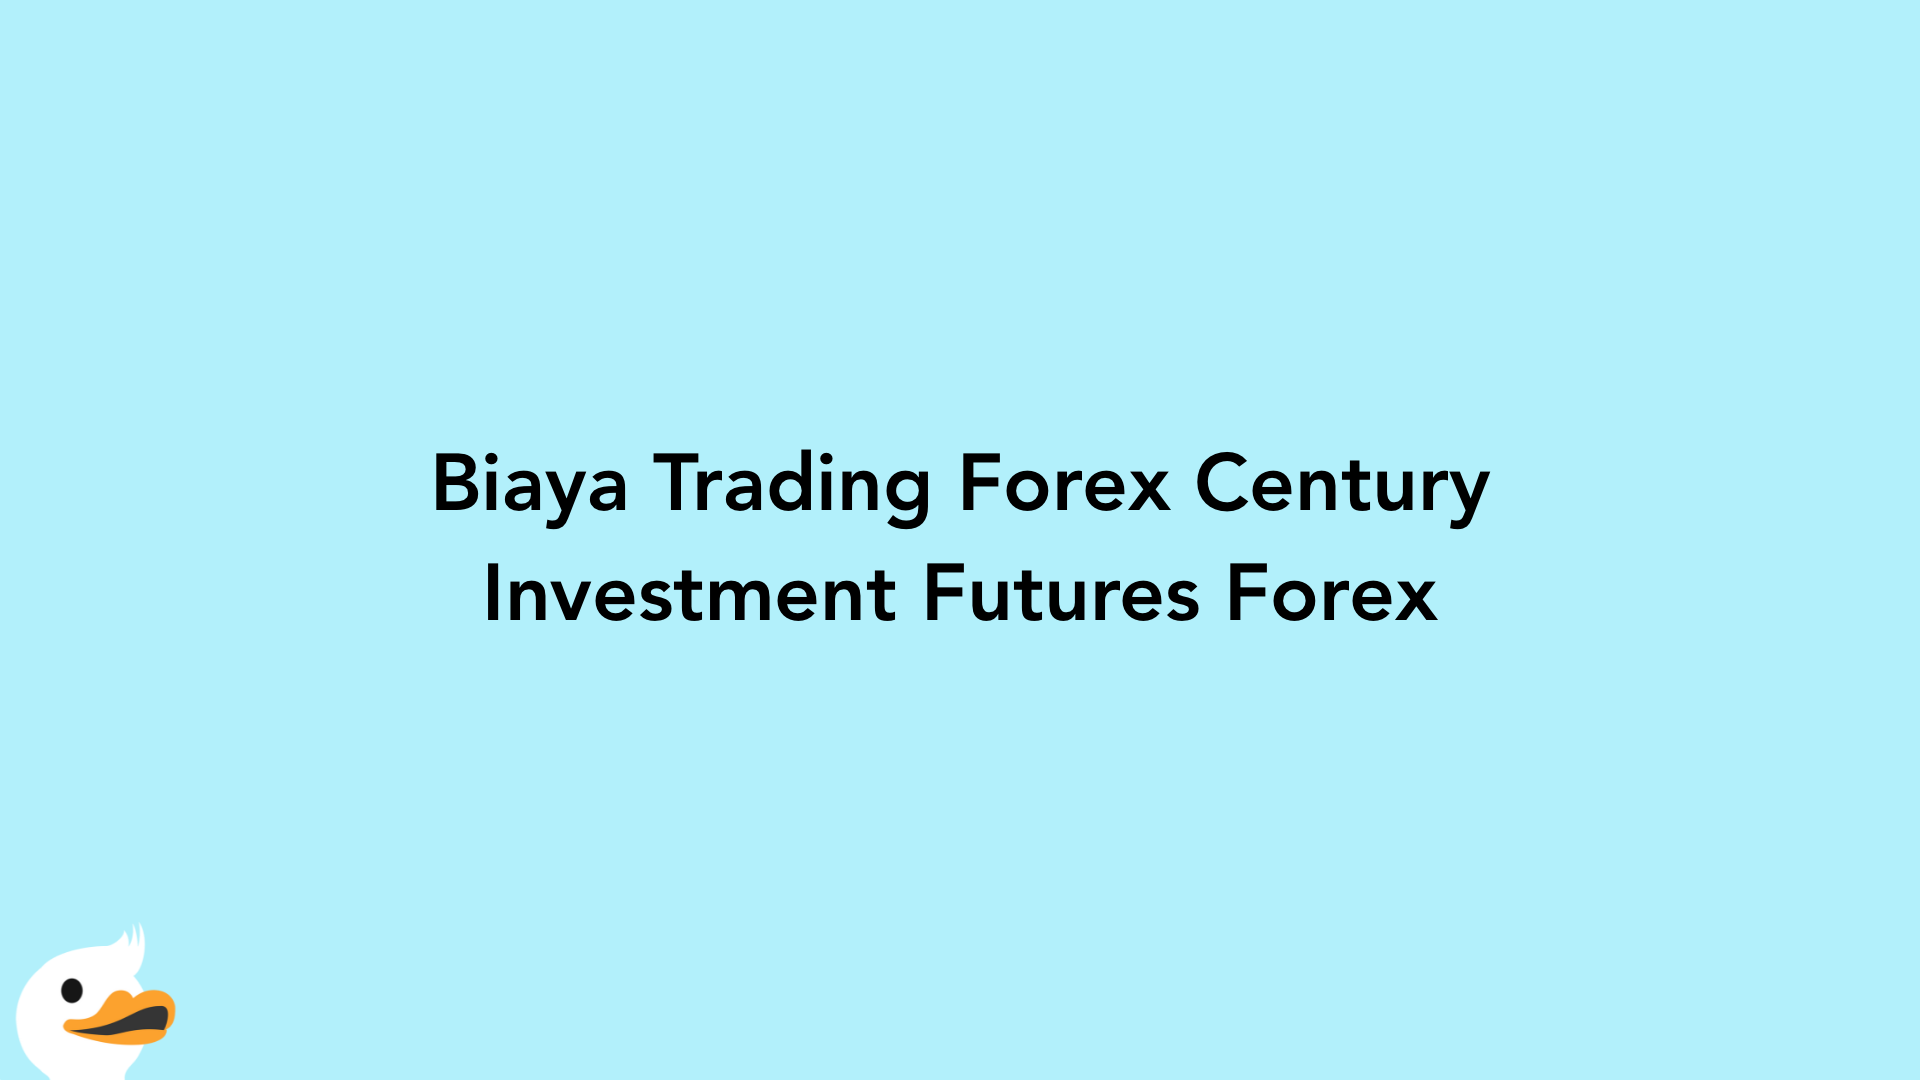 Biaya Trading Forex Century Investment Futures Forex